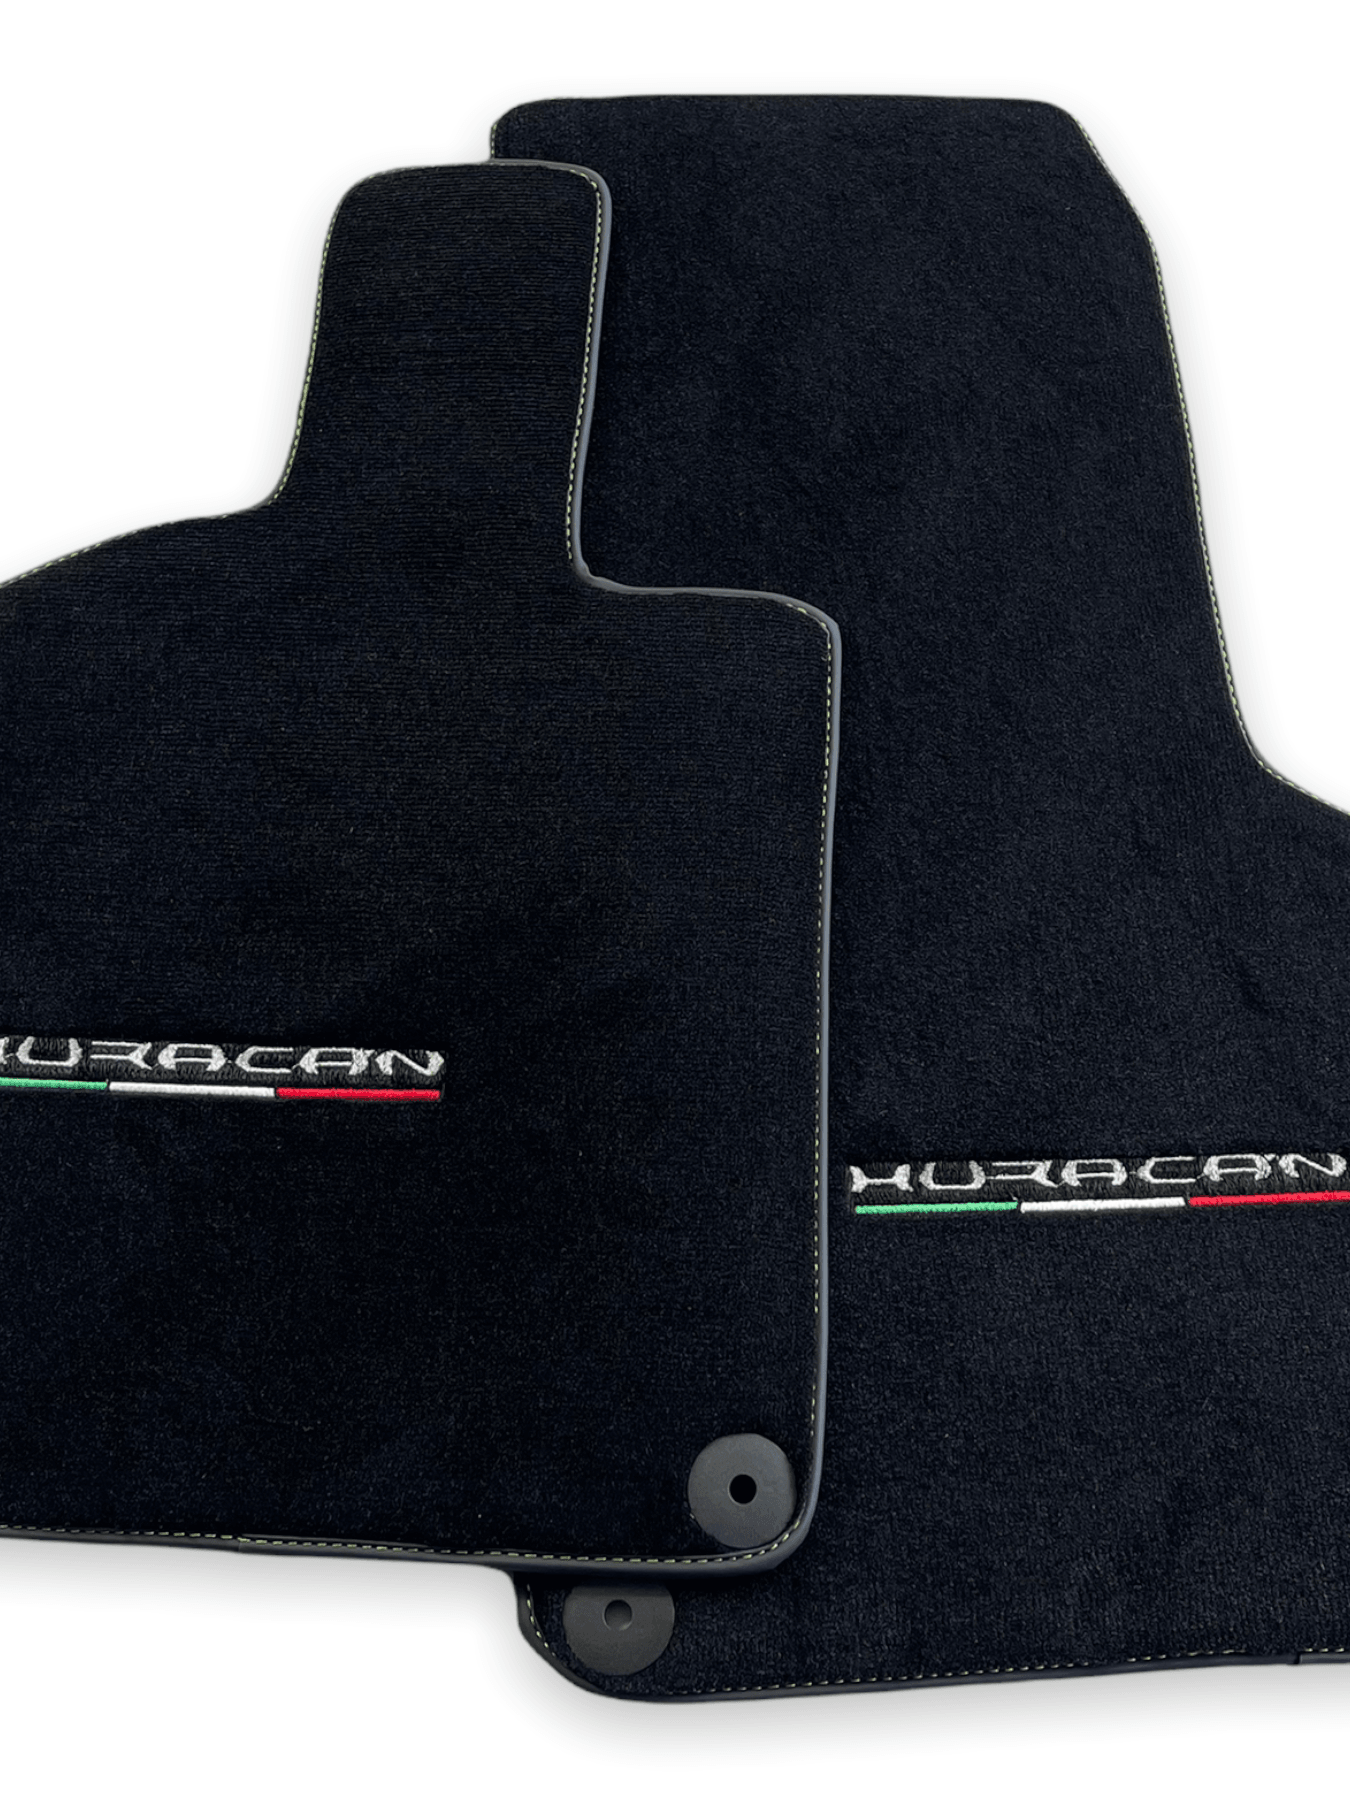 Floor Mats for Lamborghini Huracan With Italian Flag Green Stitch - AutoWin